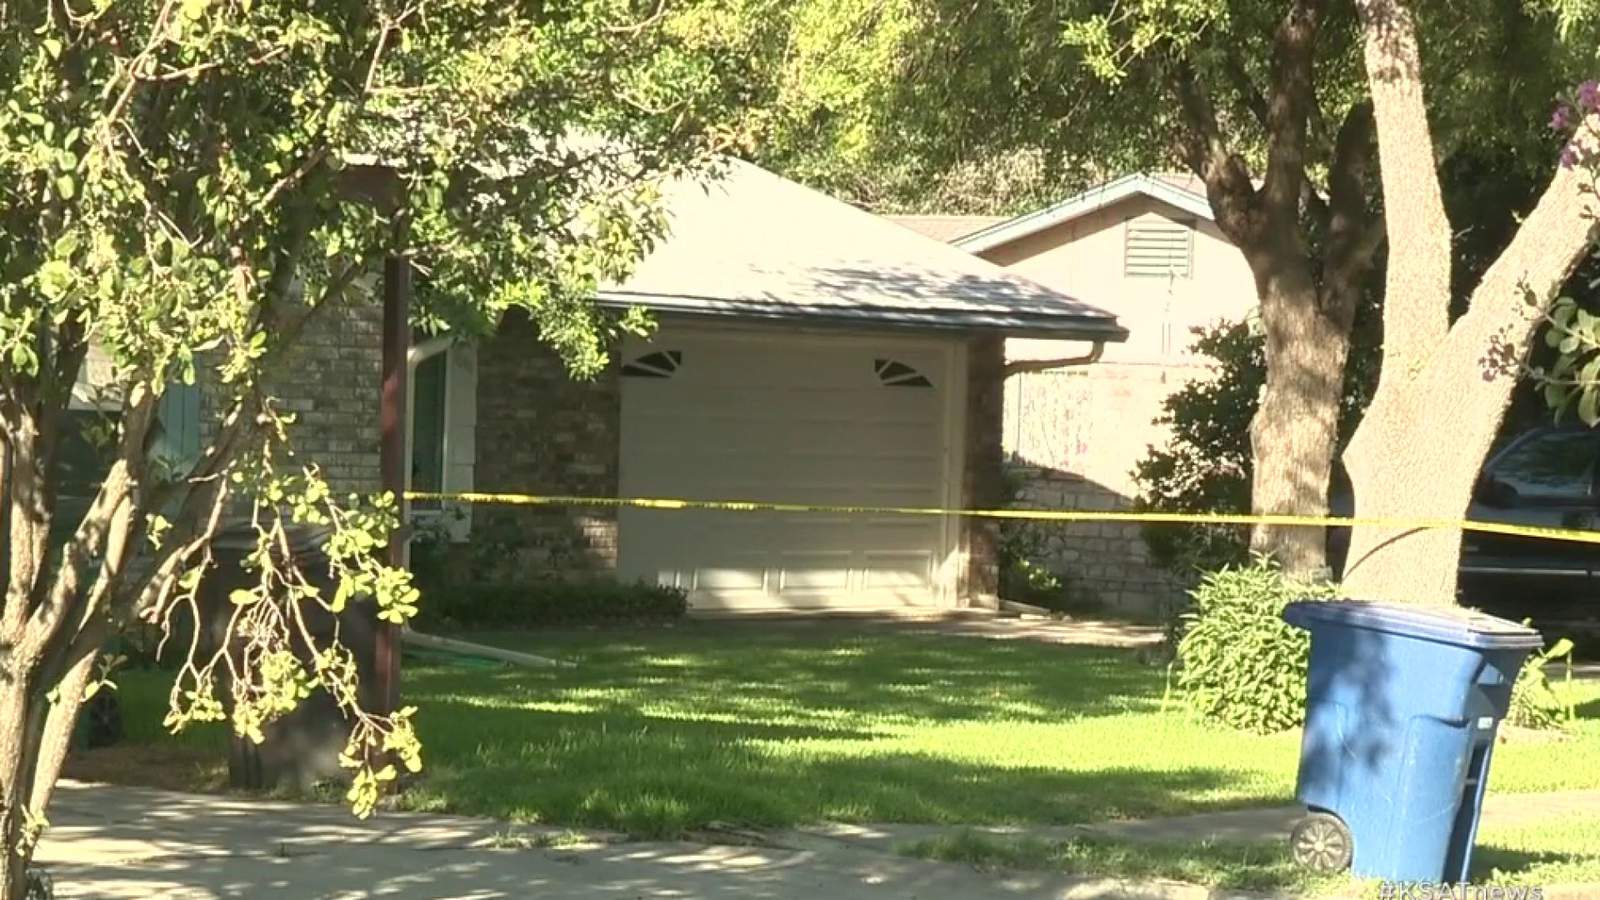 Woman fatally shoots elderly parents